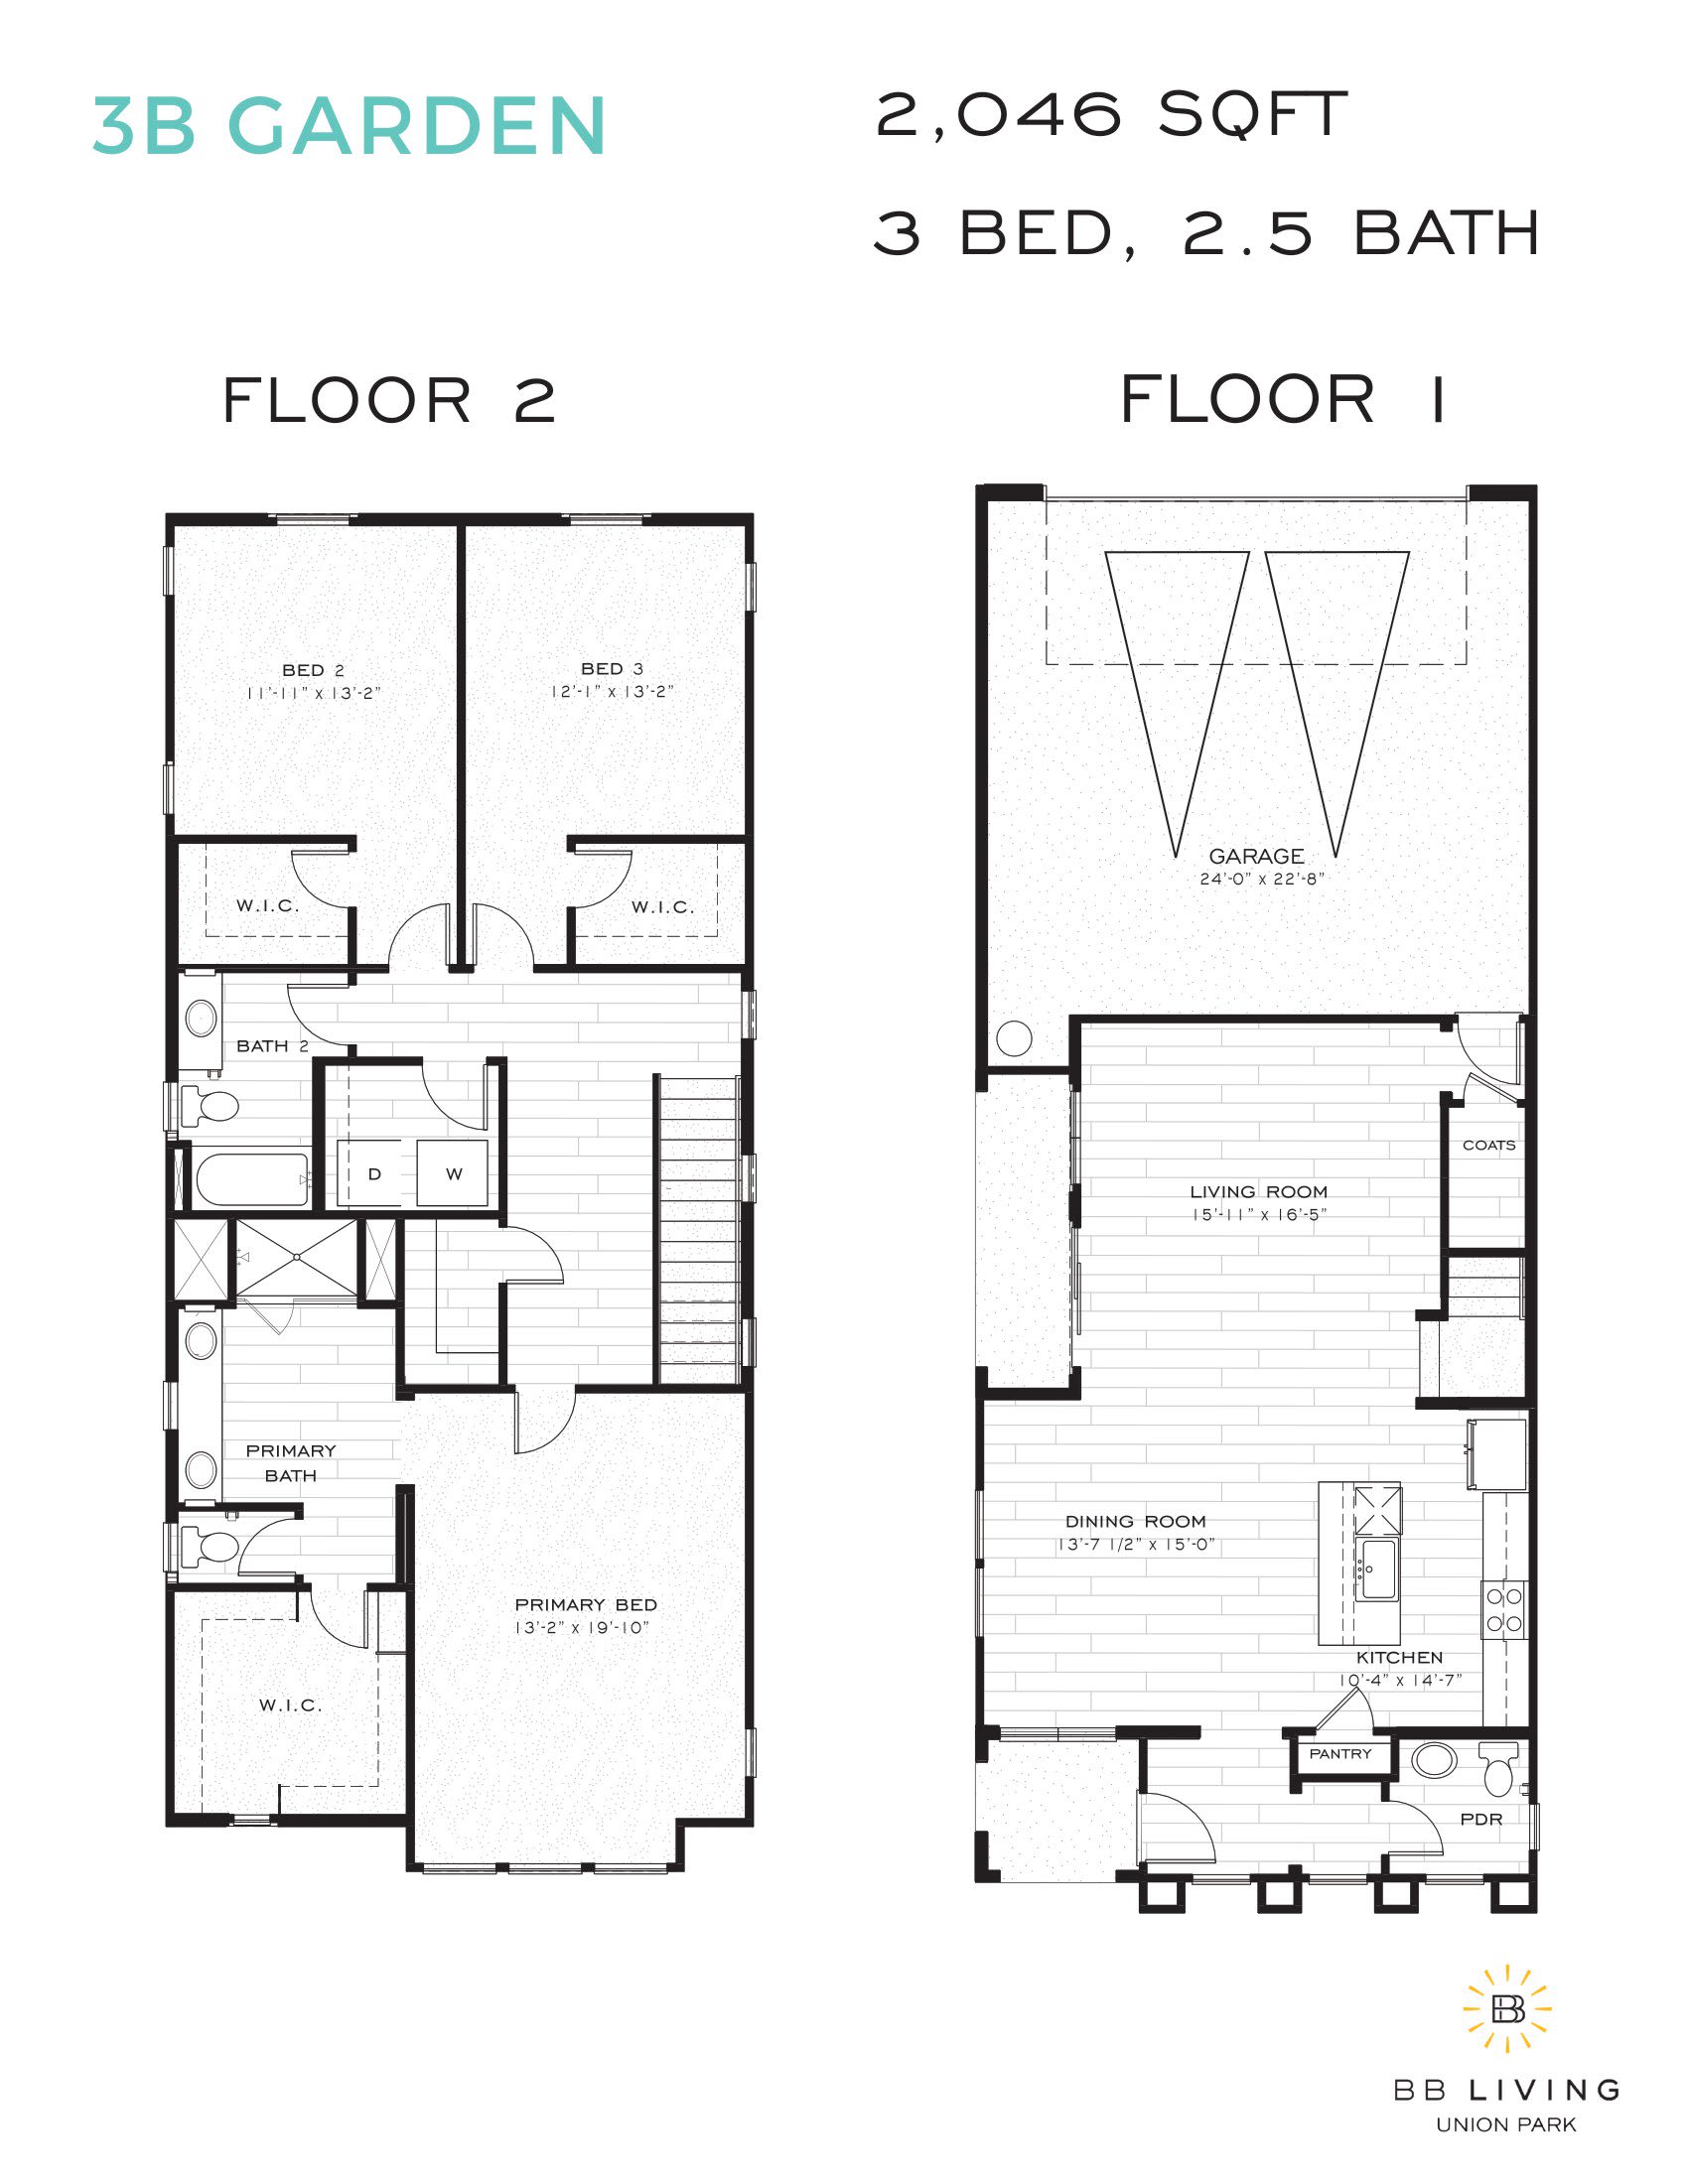 3A 2D floor plan image